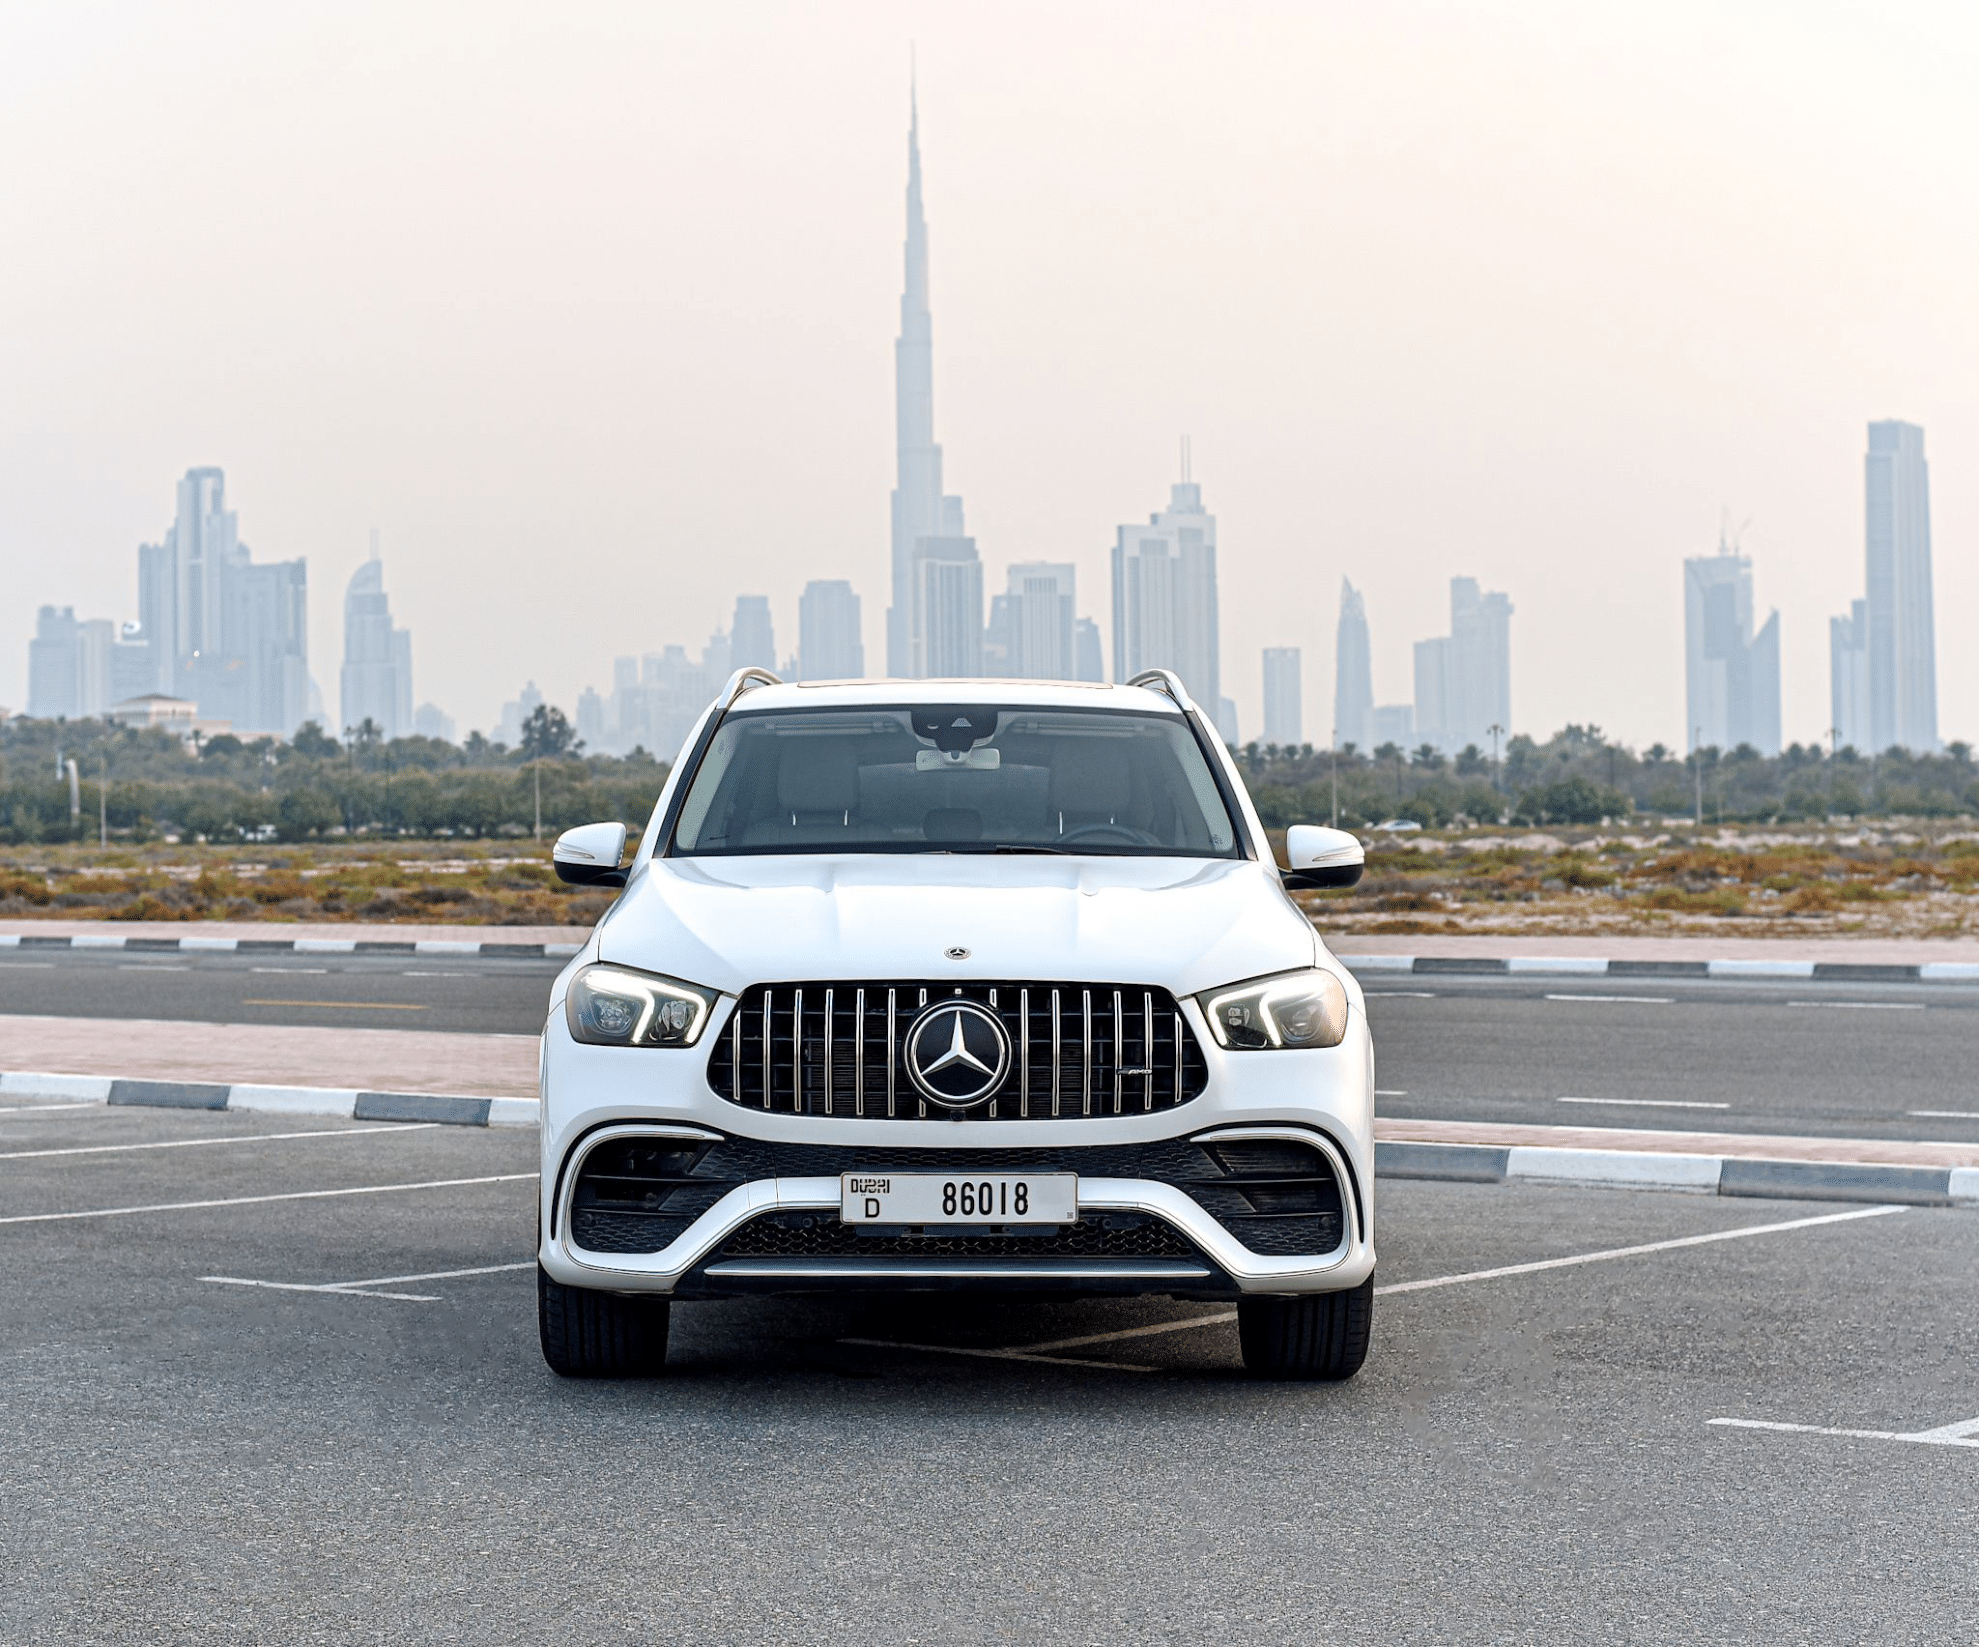 Rent Mercedes Dubai Best Rates